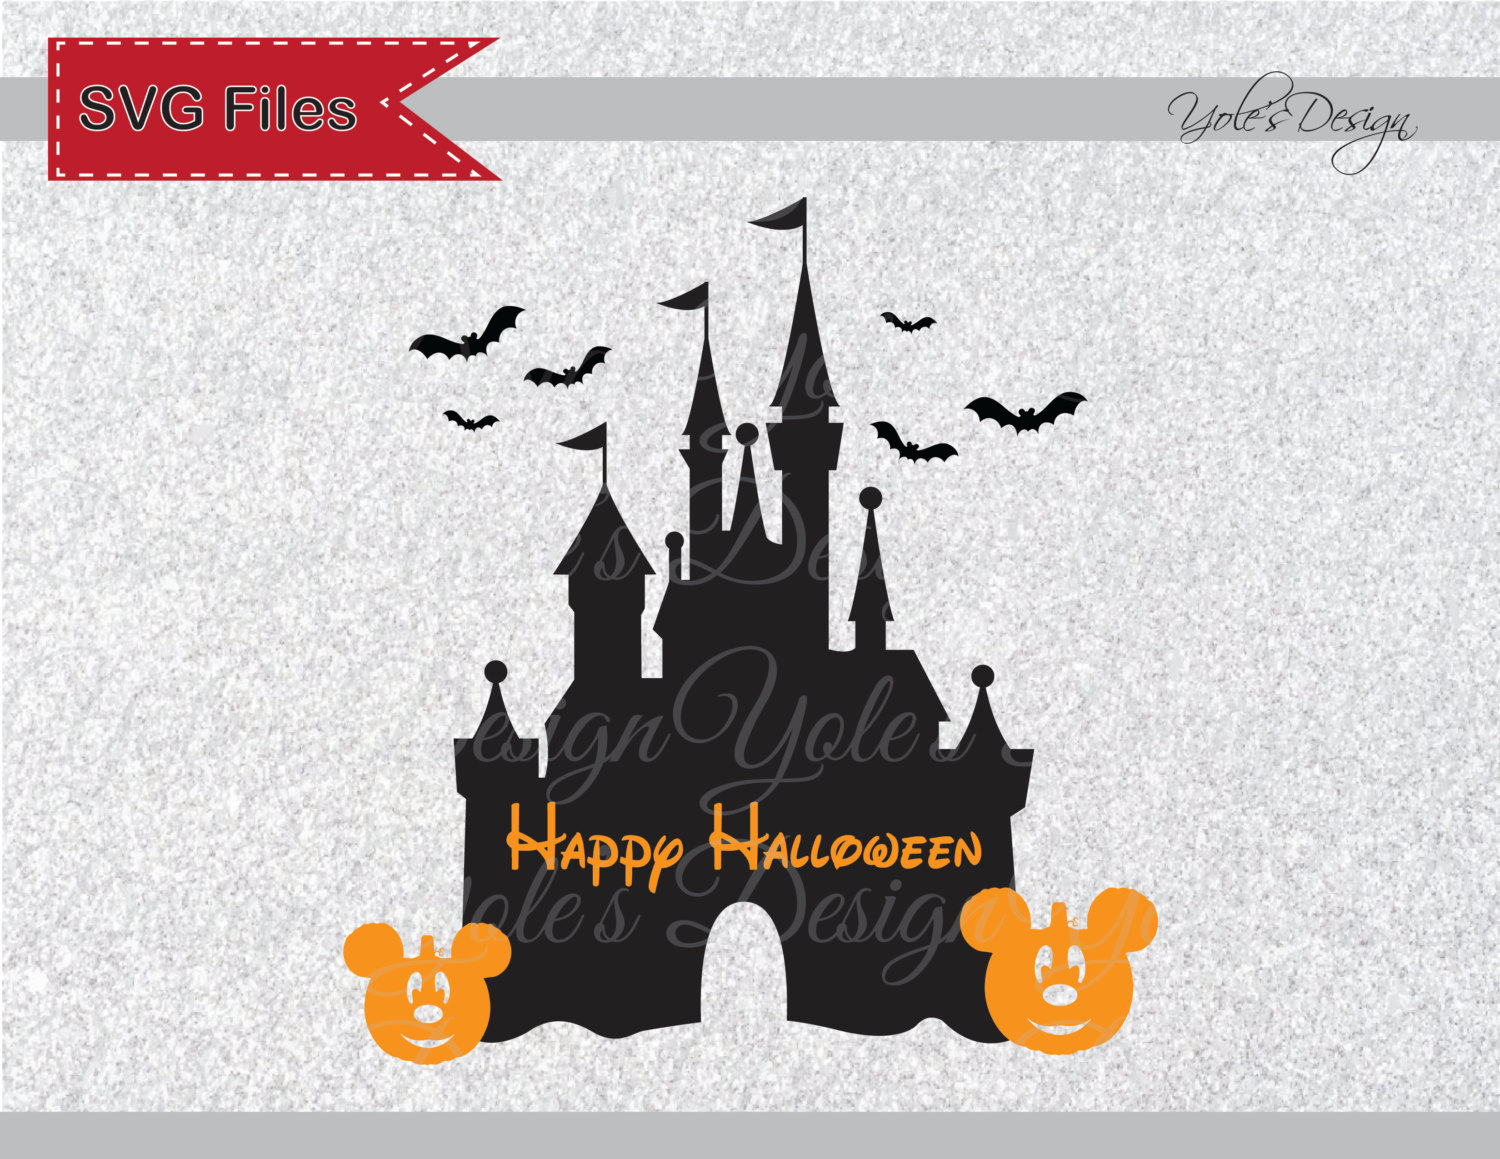 INSTANT DOWNLOAD Halloween Disney Castle SVG Disney by YoleDesign